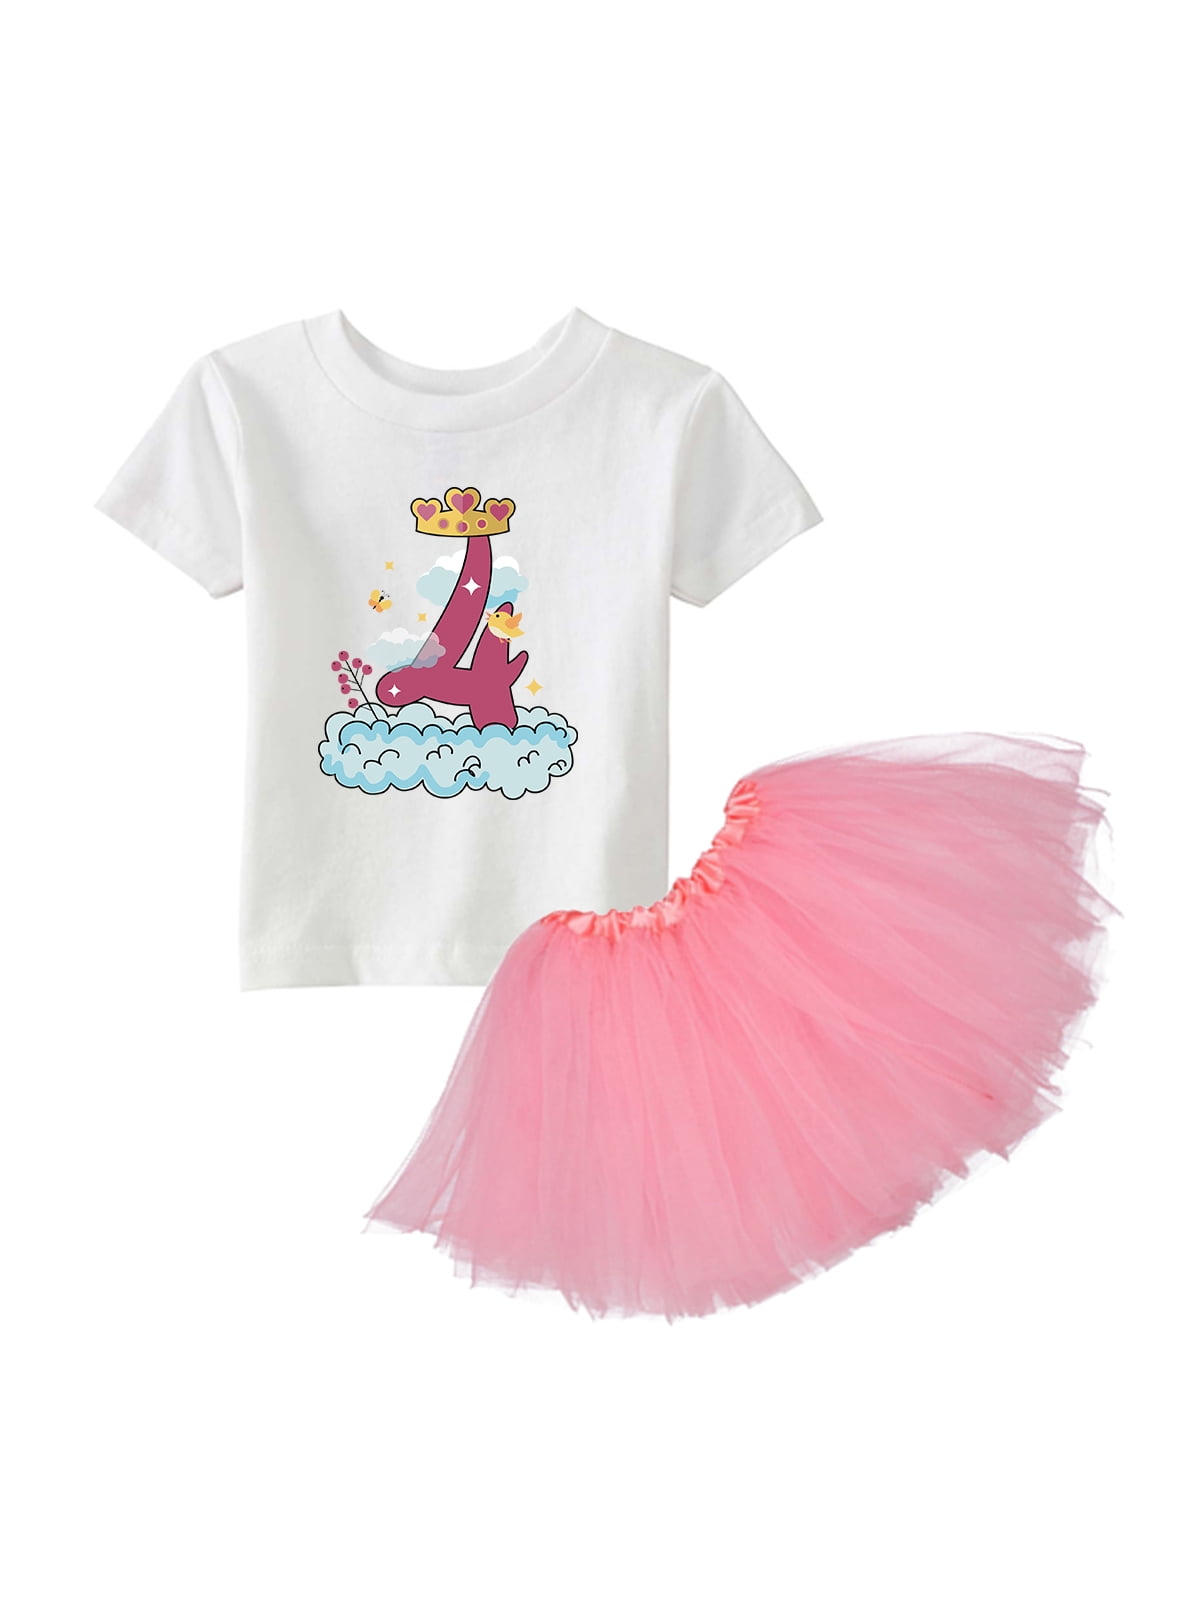 Rainbow Pony Unicorn 4th Birthday Girl Shirt Fourth Birthday Outfit Personalize